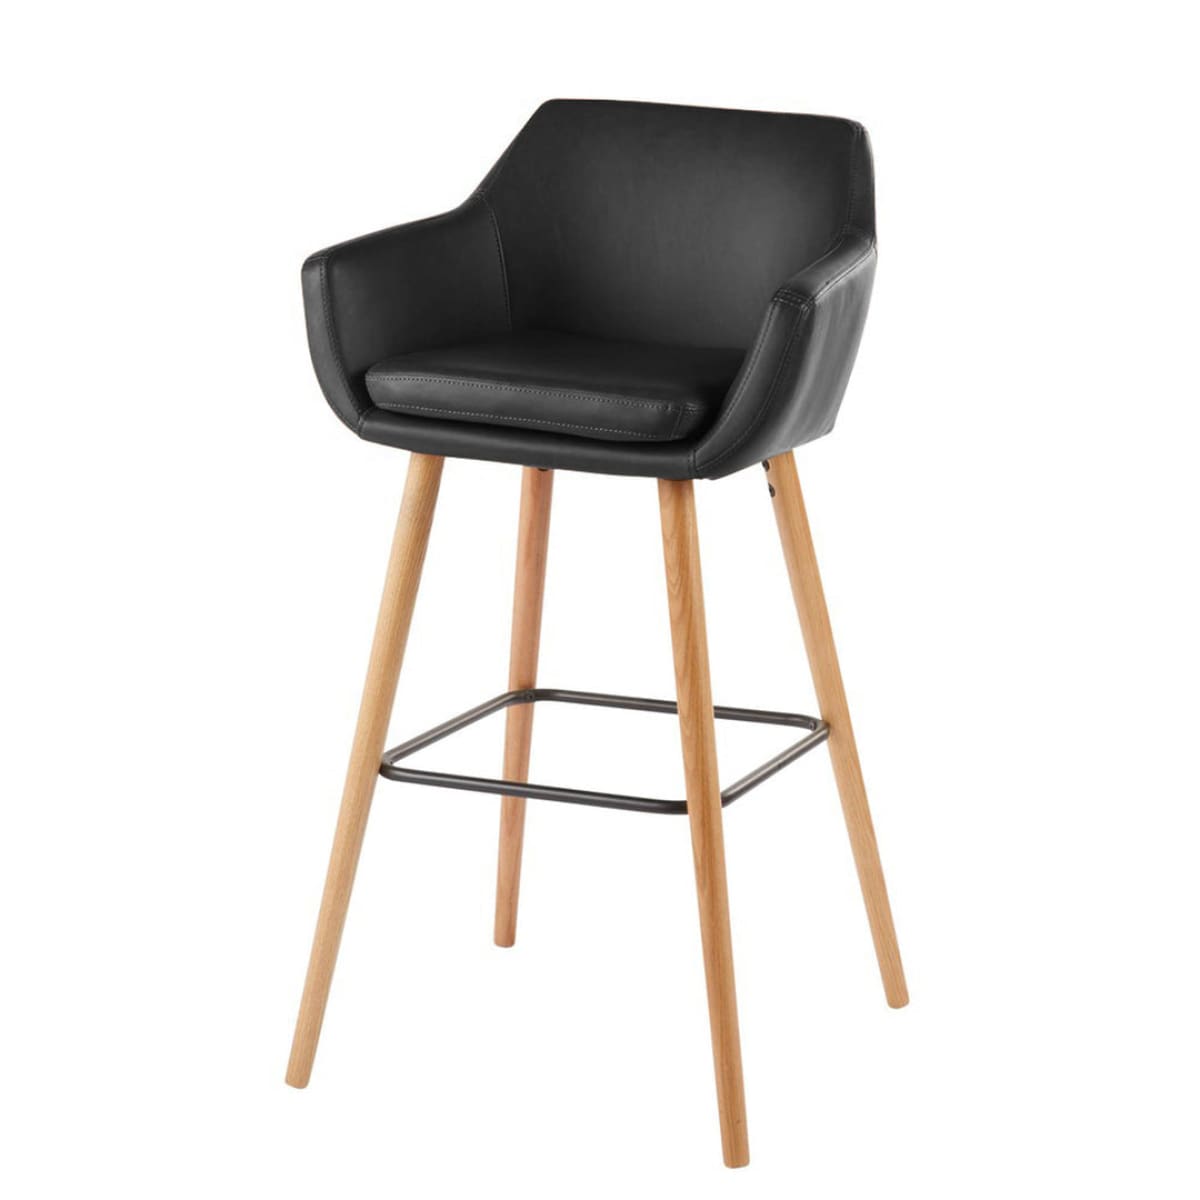 Fab Bar Stool - Distressed Black (Limited Edition) - lh-import-stools